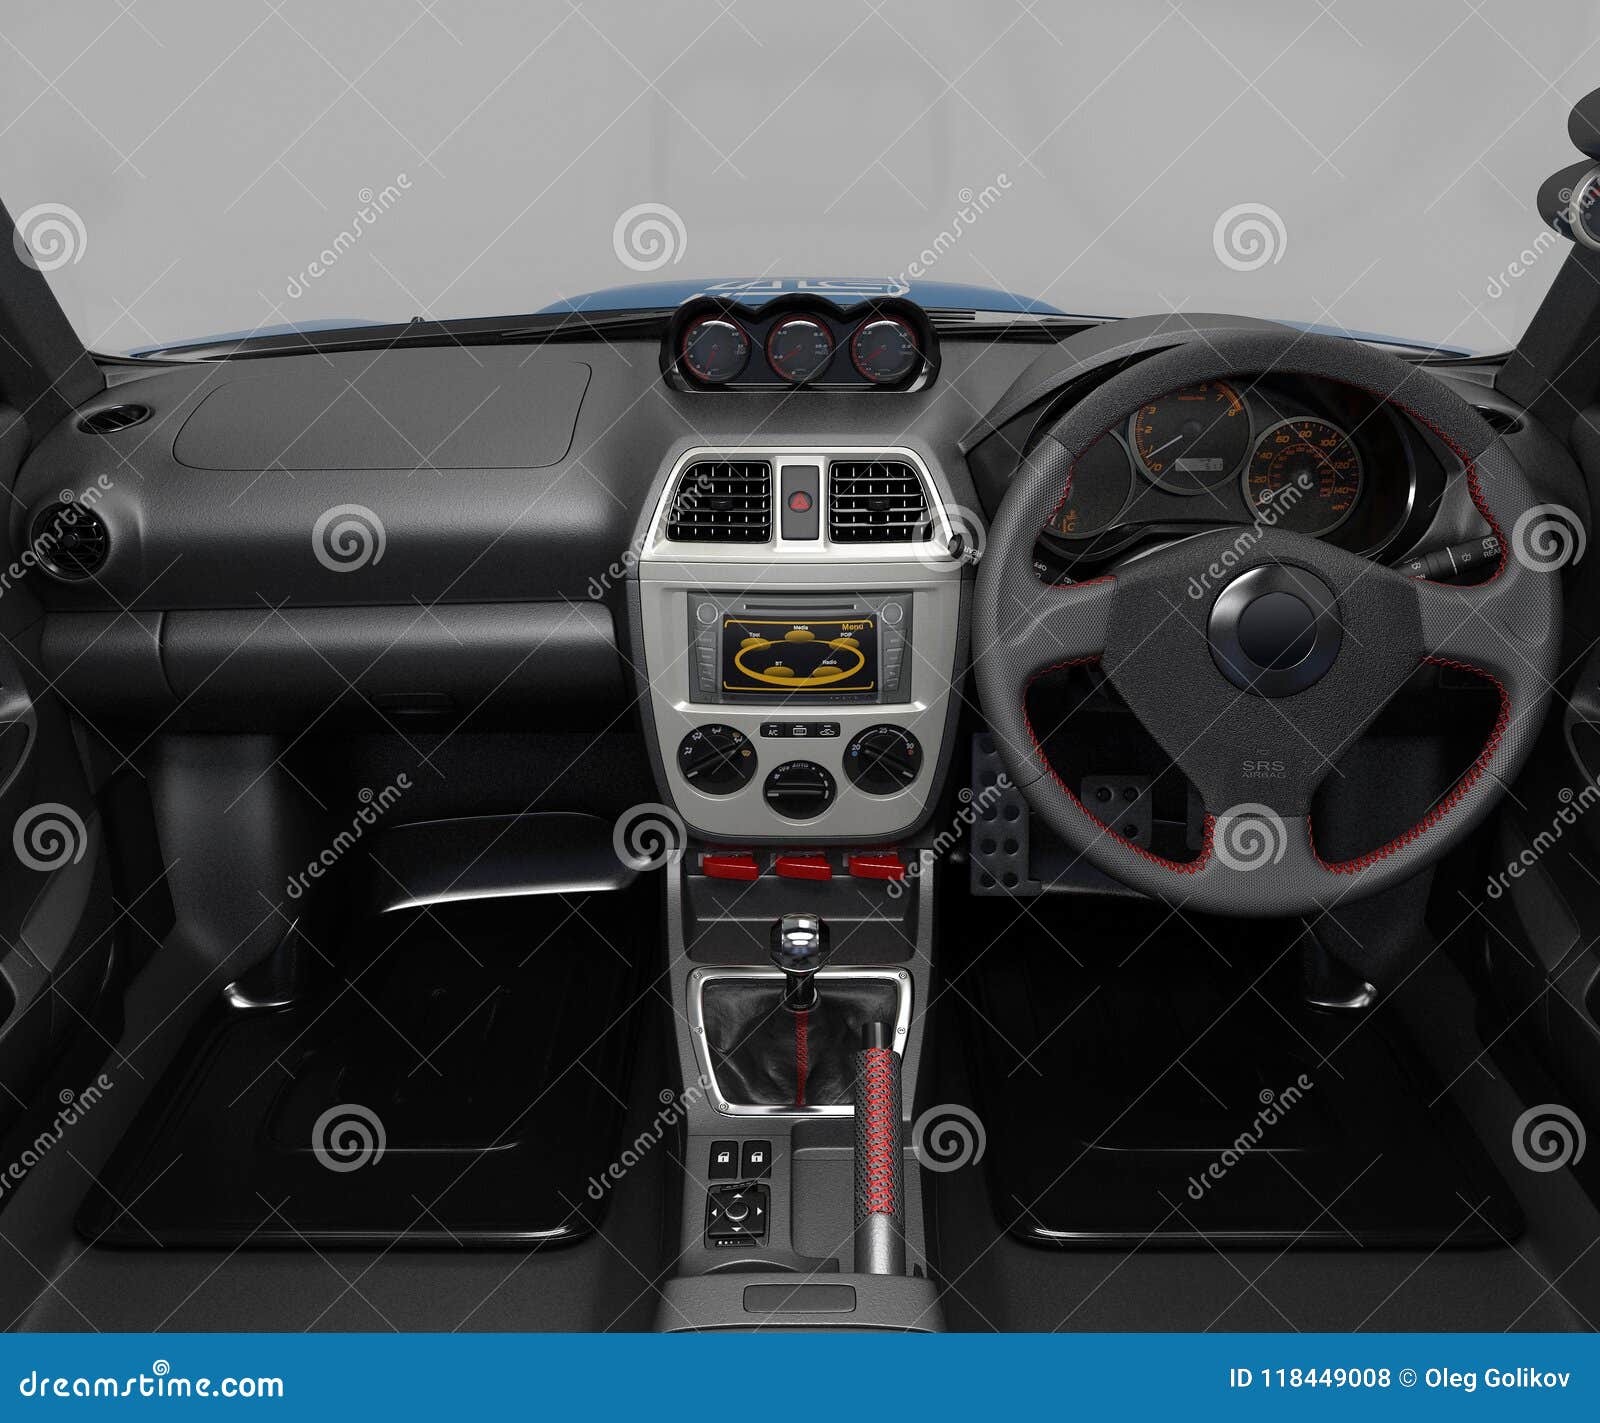 https://thumbs.dreamstime.com/z/salon-sports-car-dashboard-its-individual-parts-d-illustration-instrument-panel-separate-constructive-propobotka-118449008.jpg